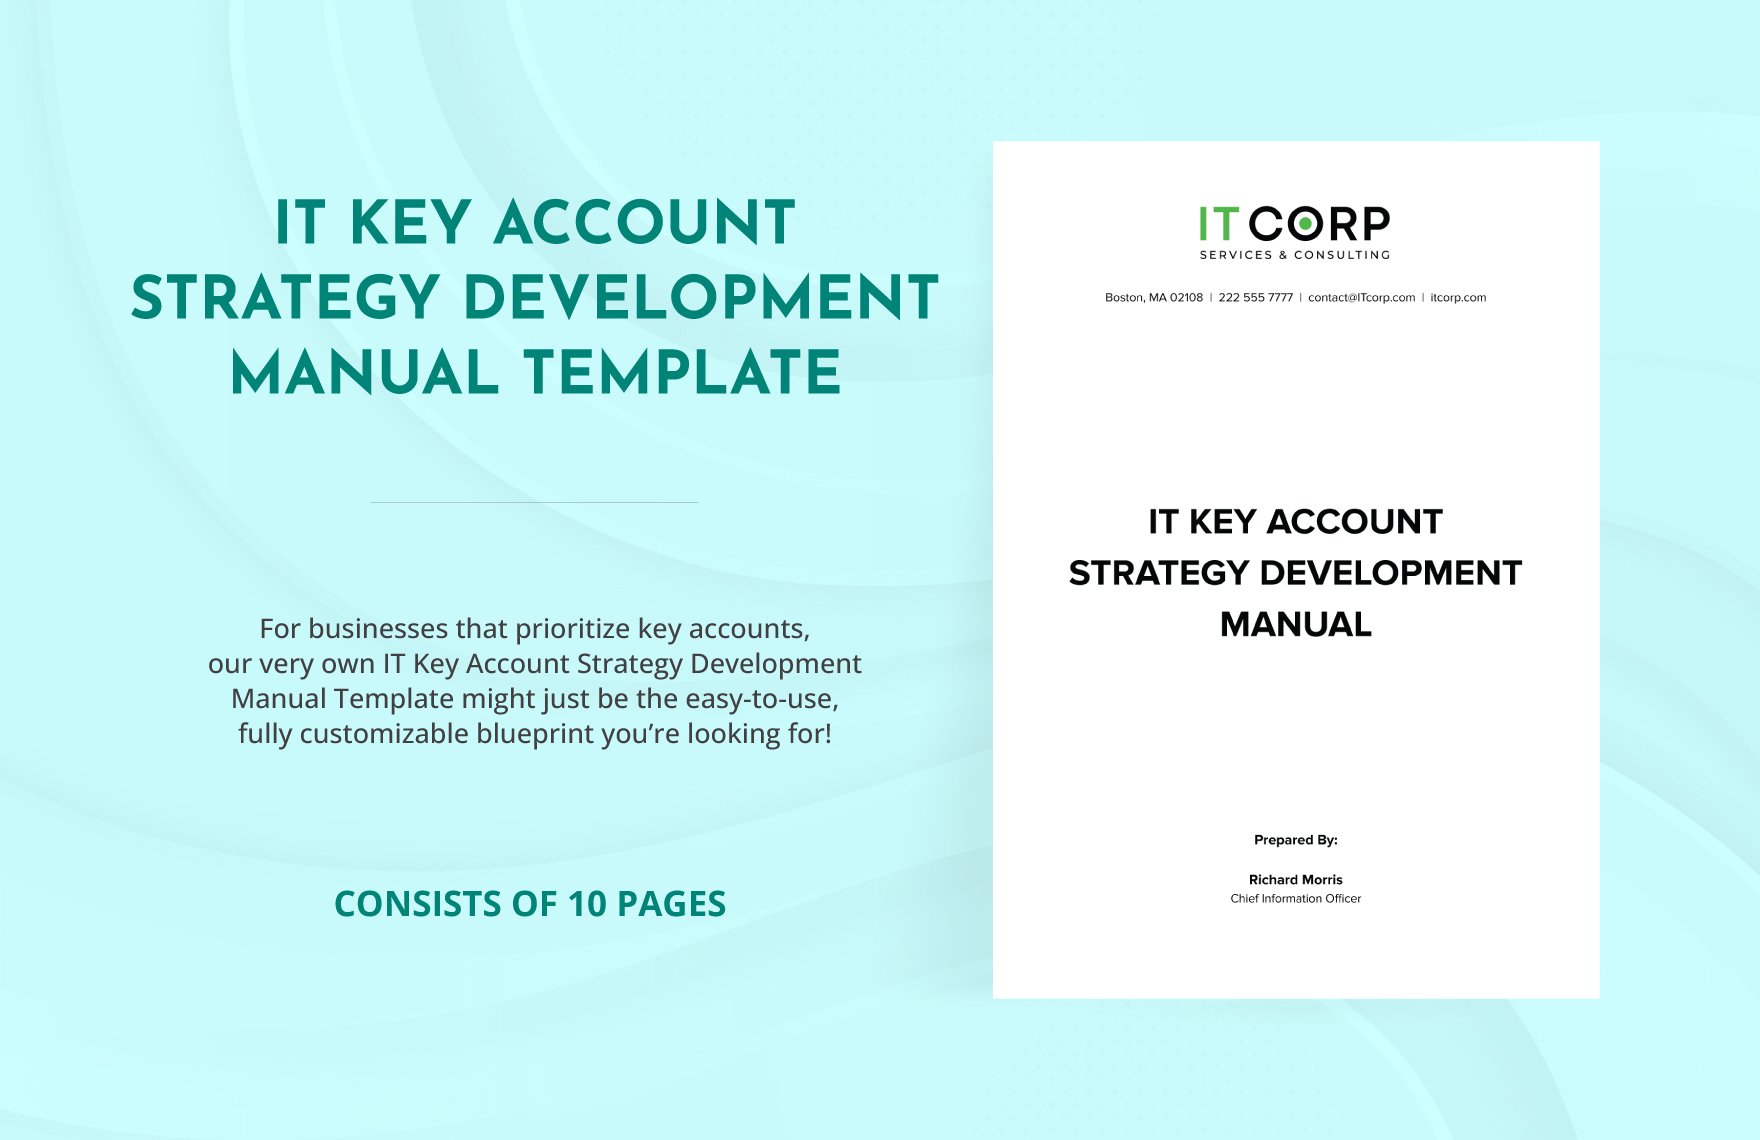 IT Key Account Strategy Development Manual Template in Word, Google Docs, PDF